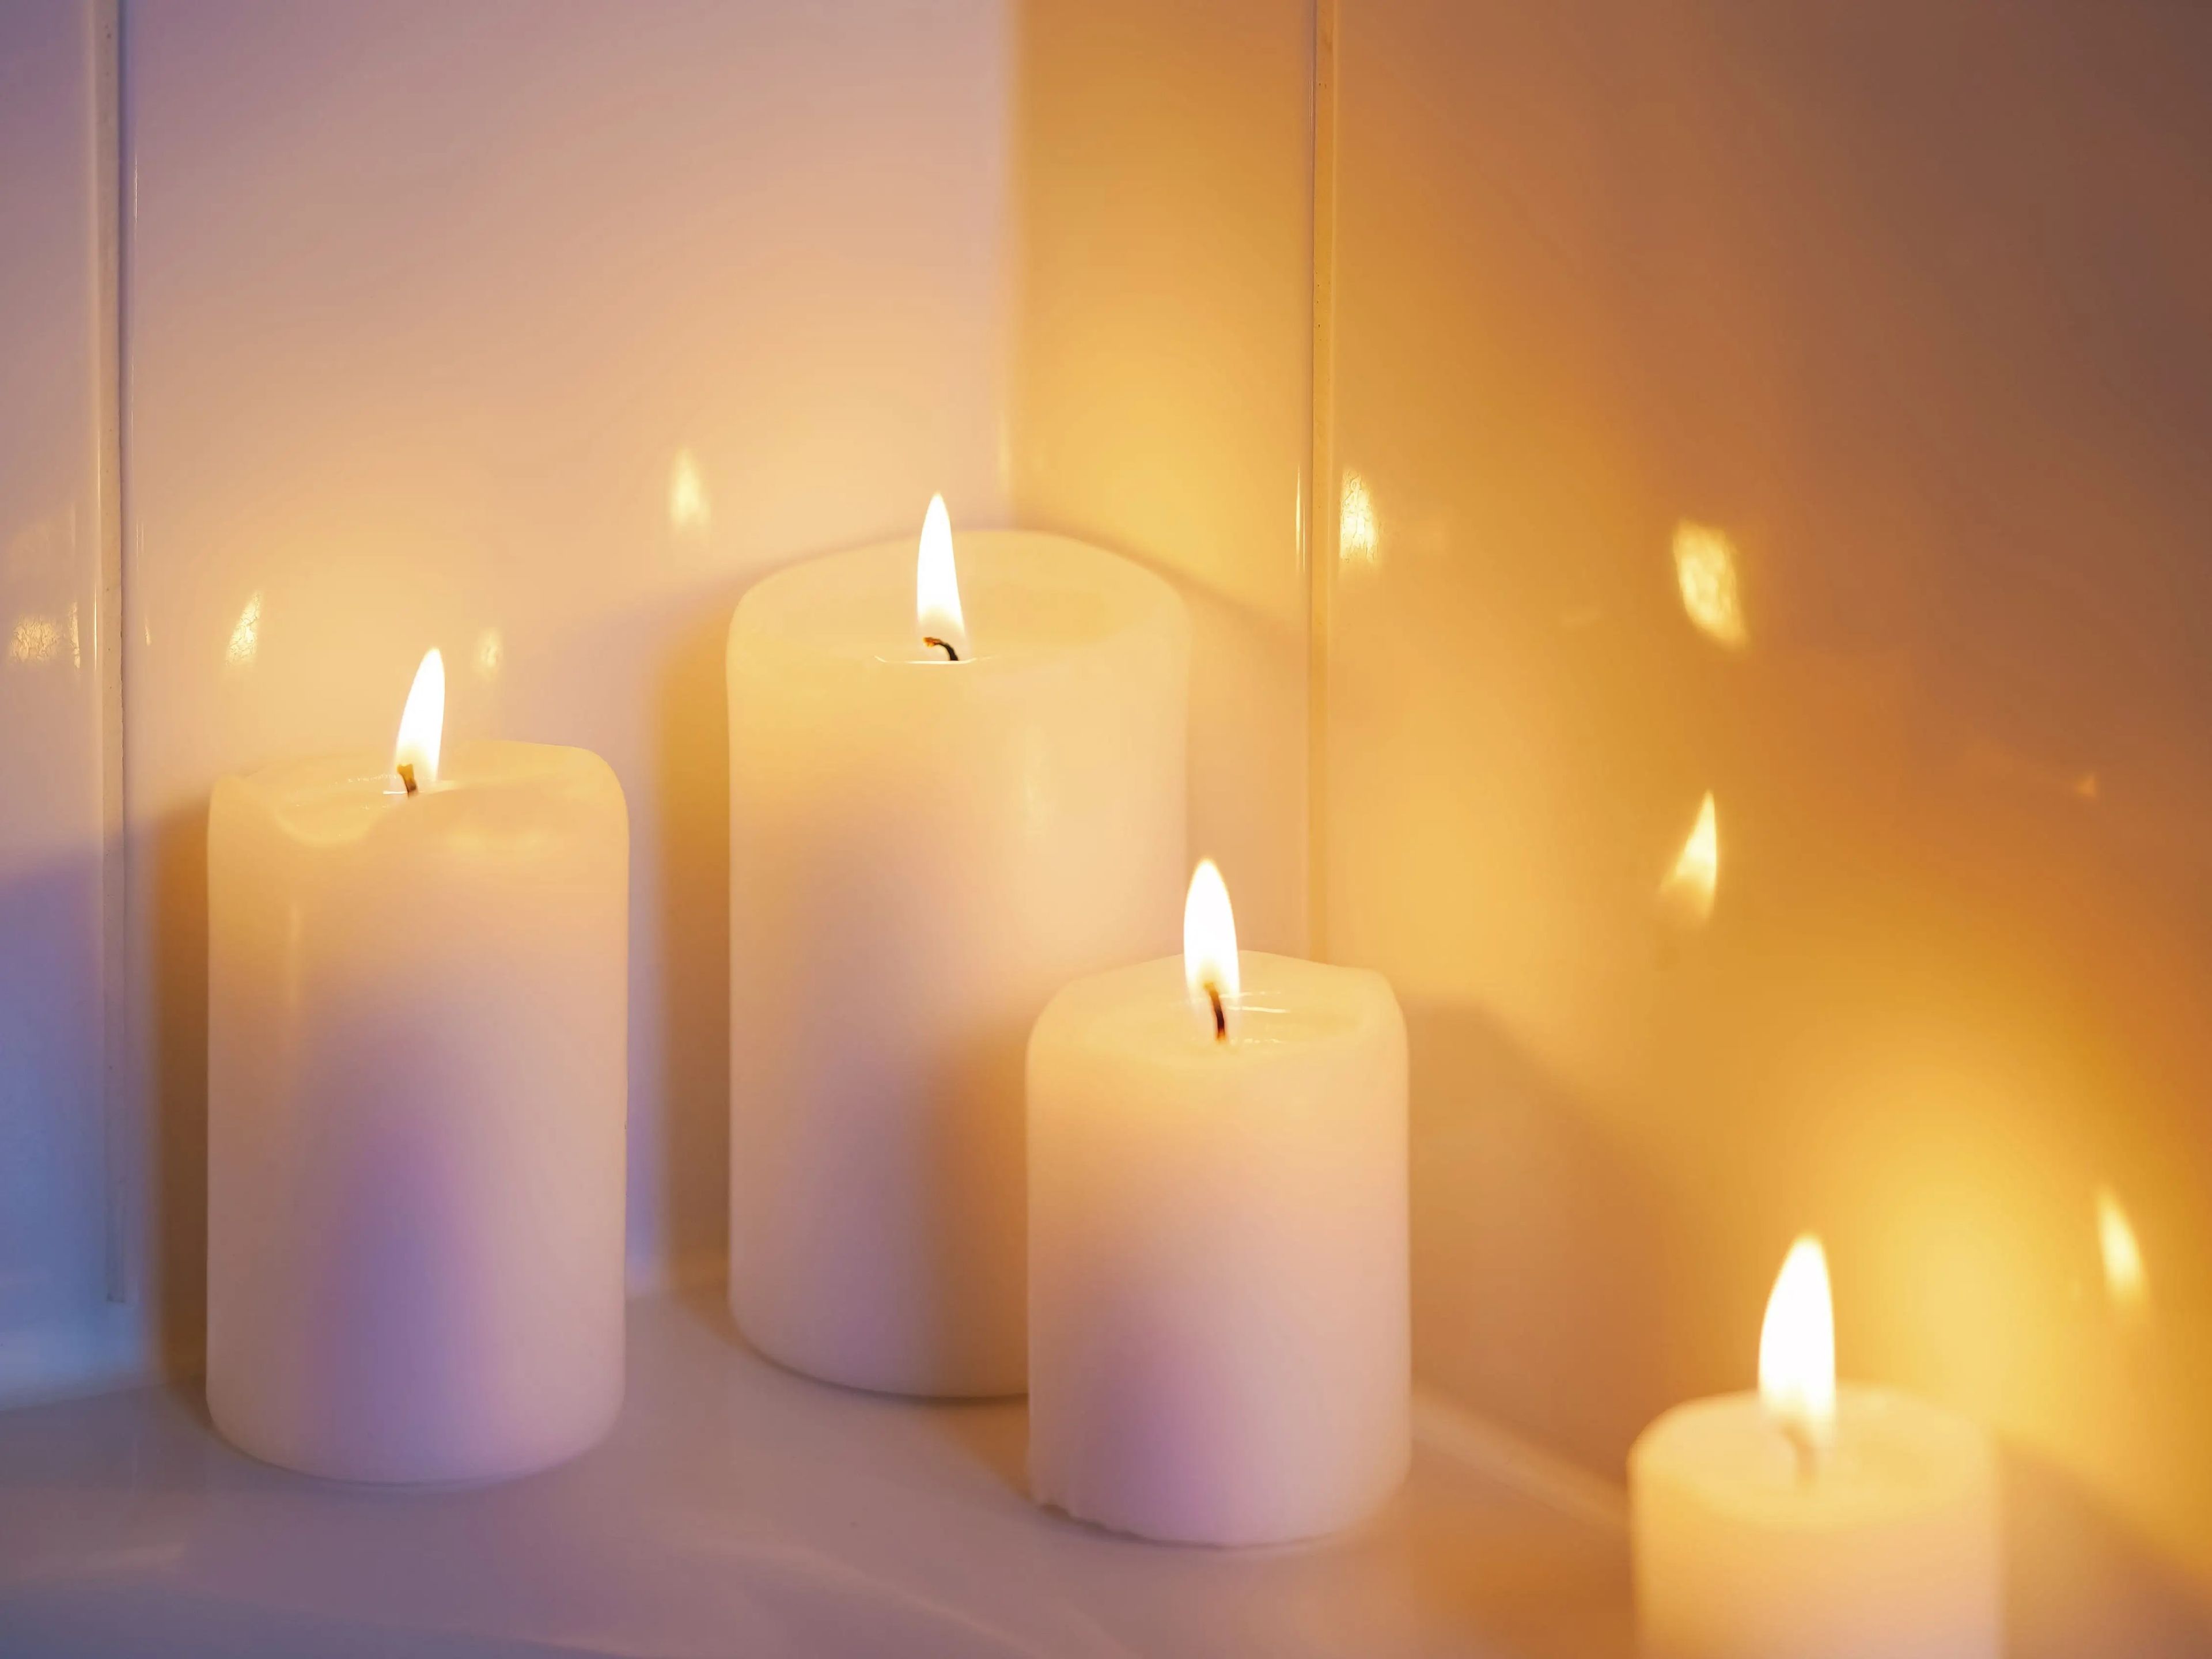 lit, white candles arranged on corner of tub